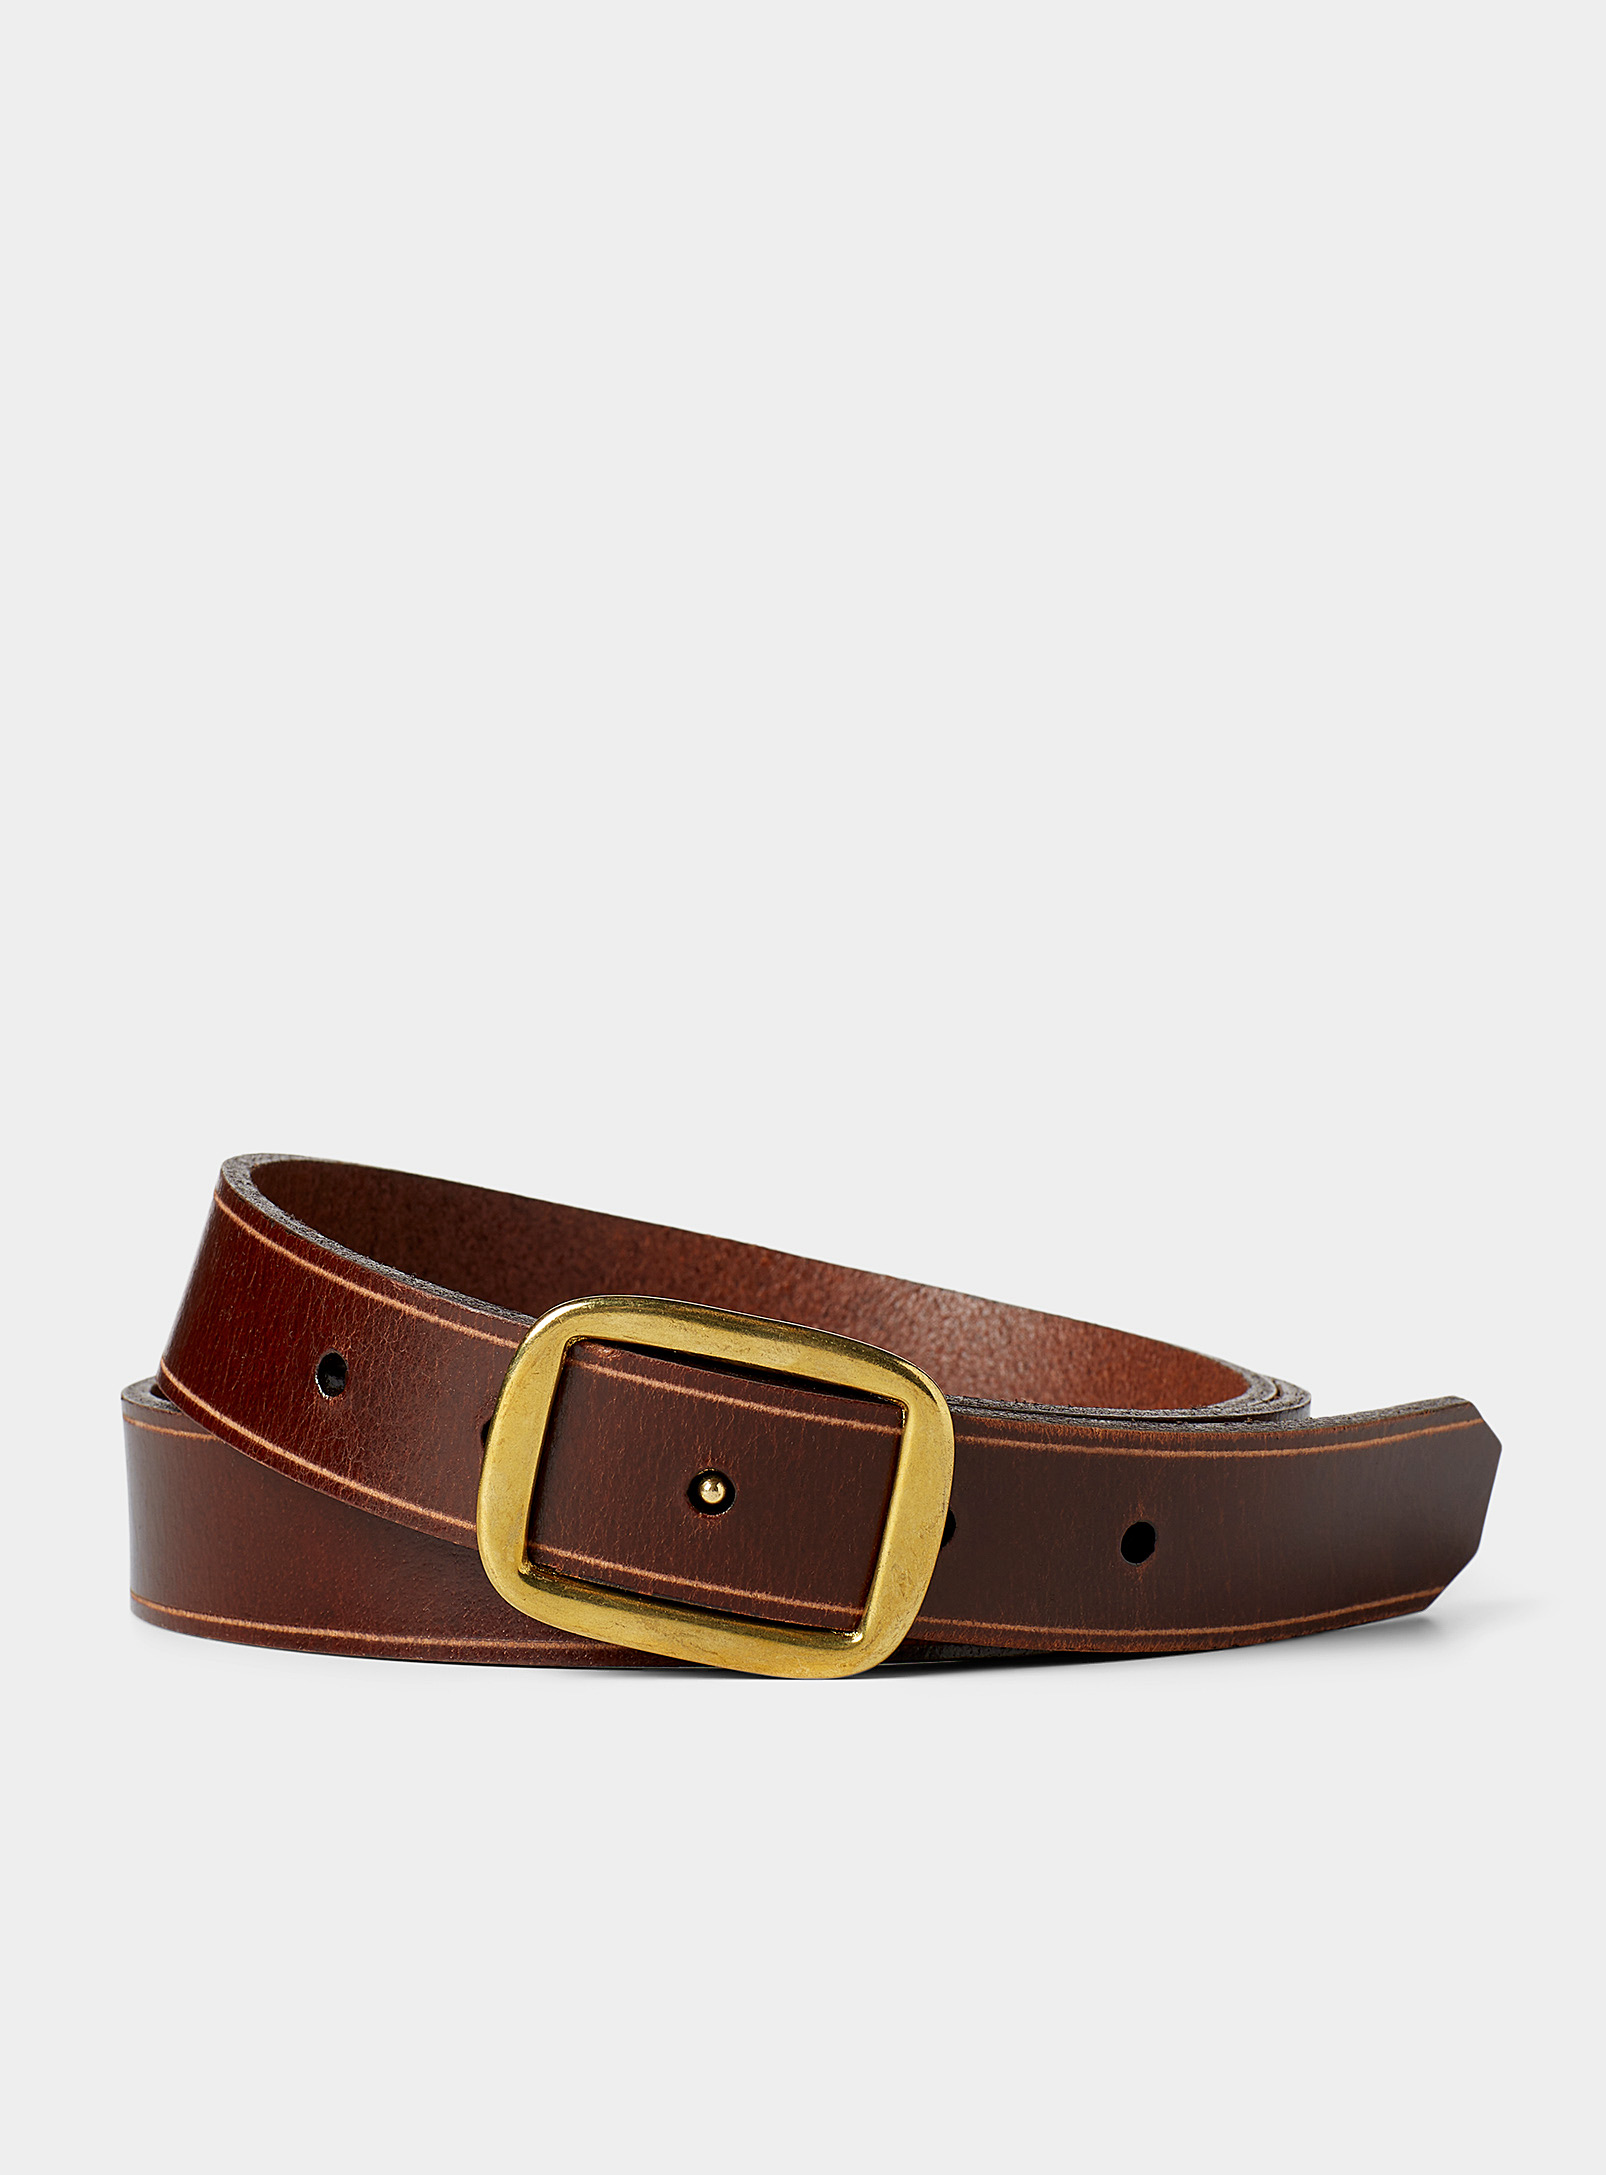 Flechr - Men's Conway leather belt